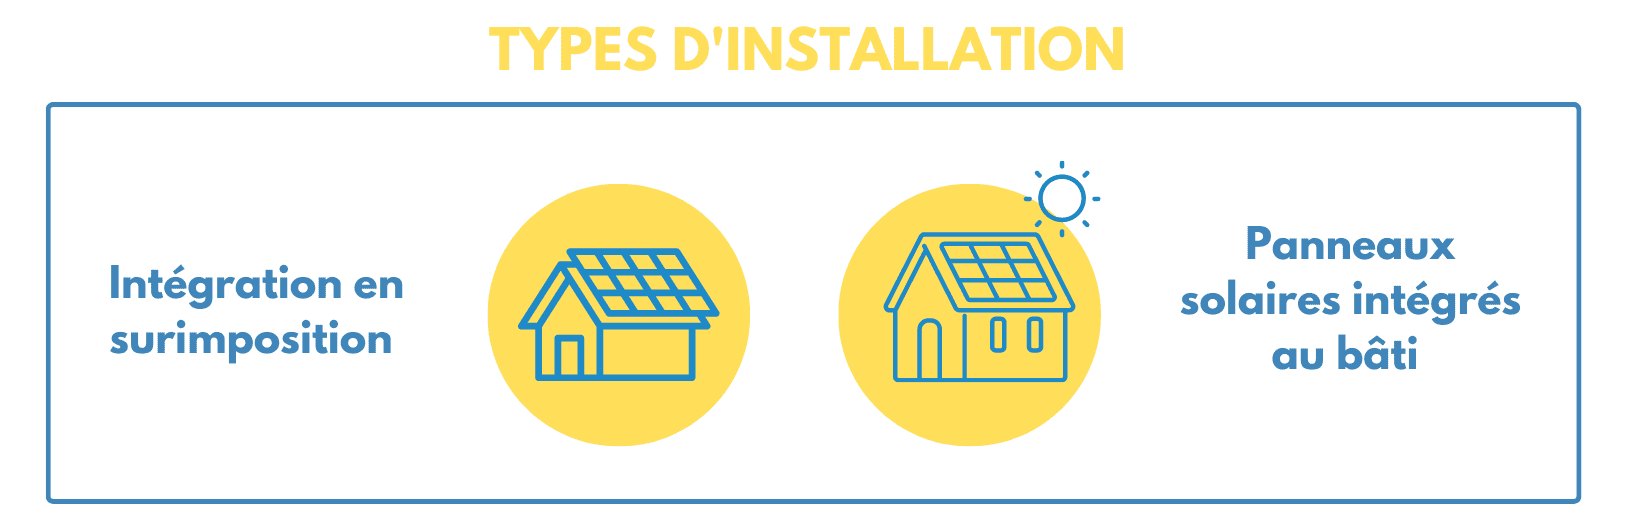 installation-solaire-surimposition-integration